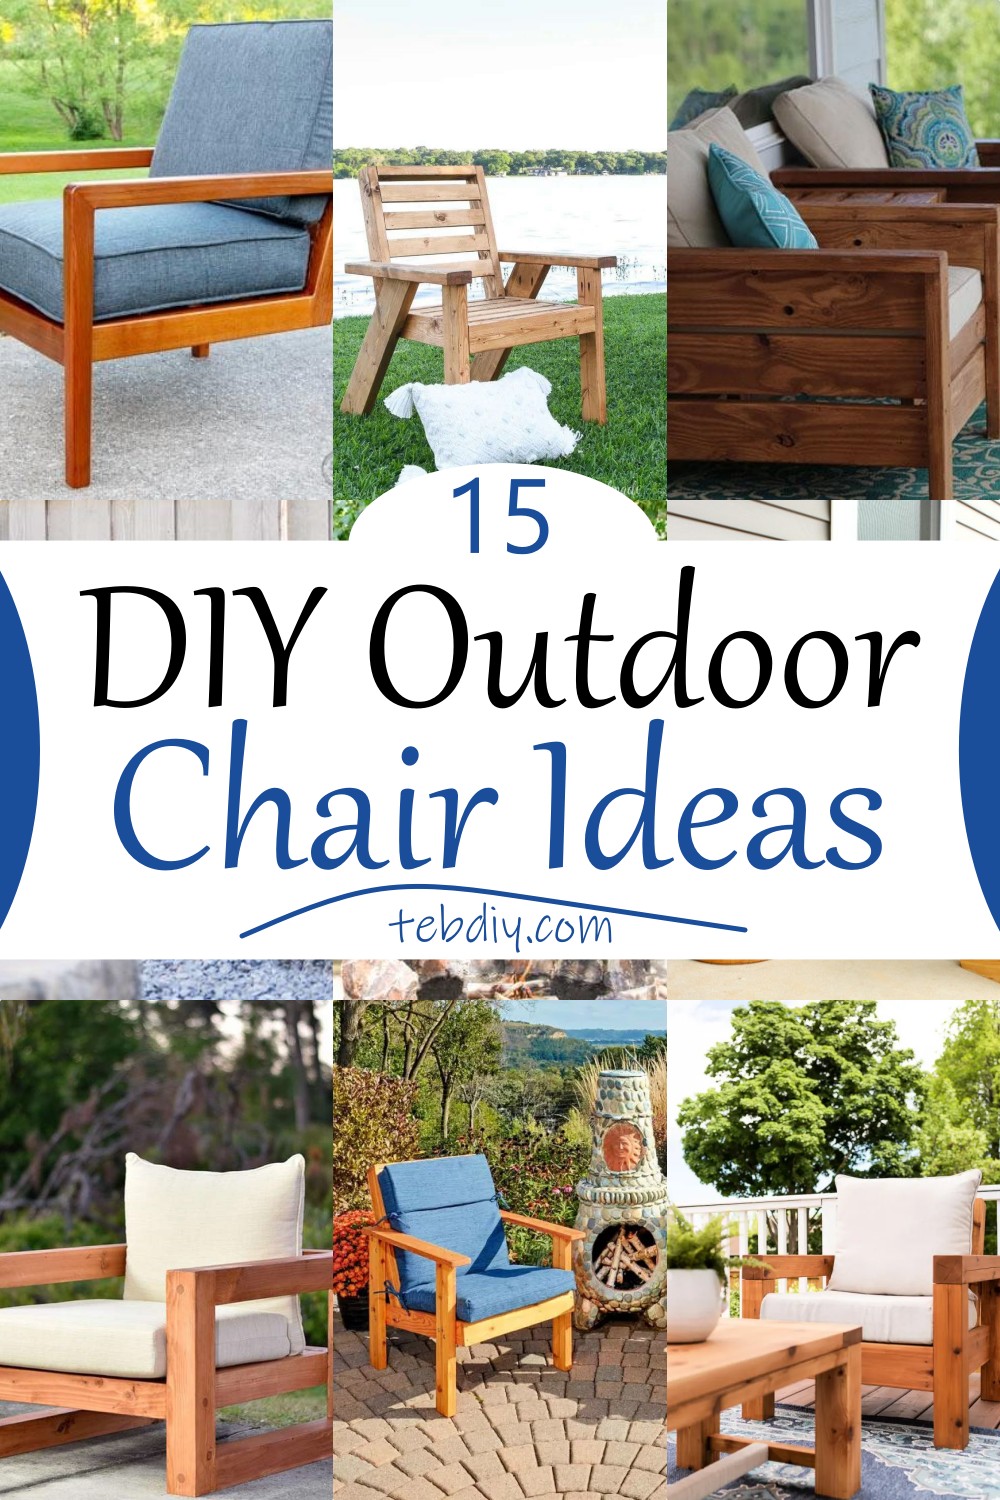 15 DIY Outdoor Chair Ideas